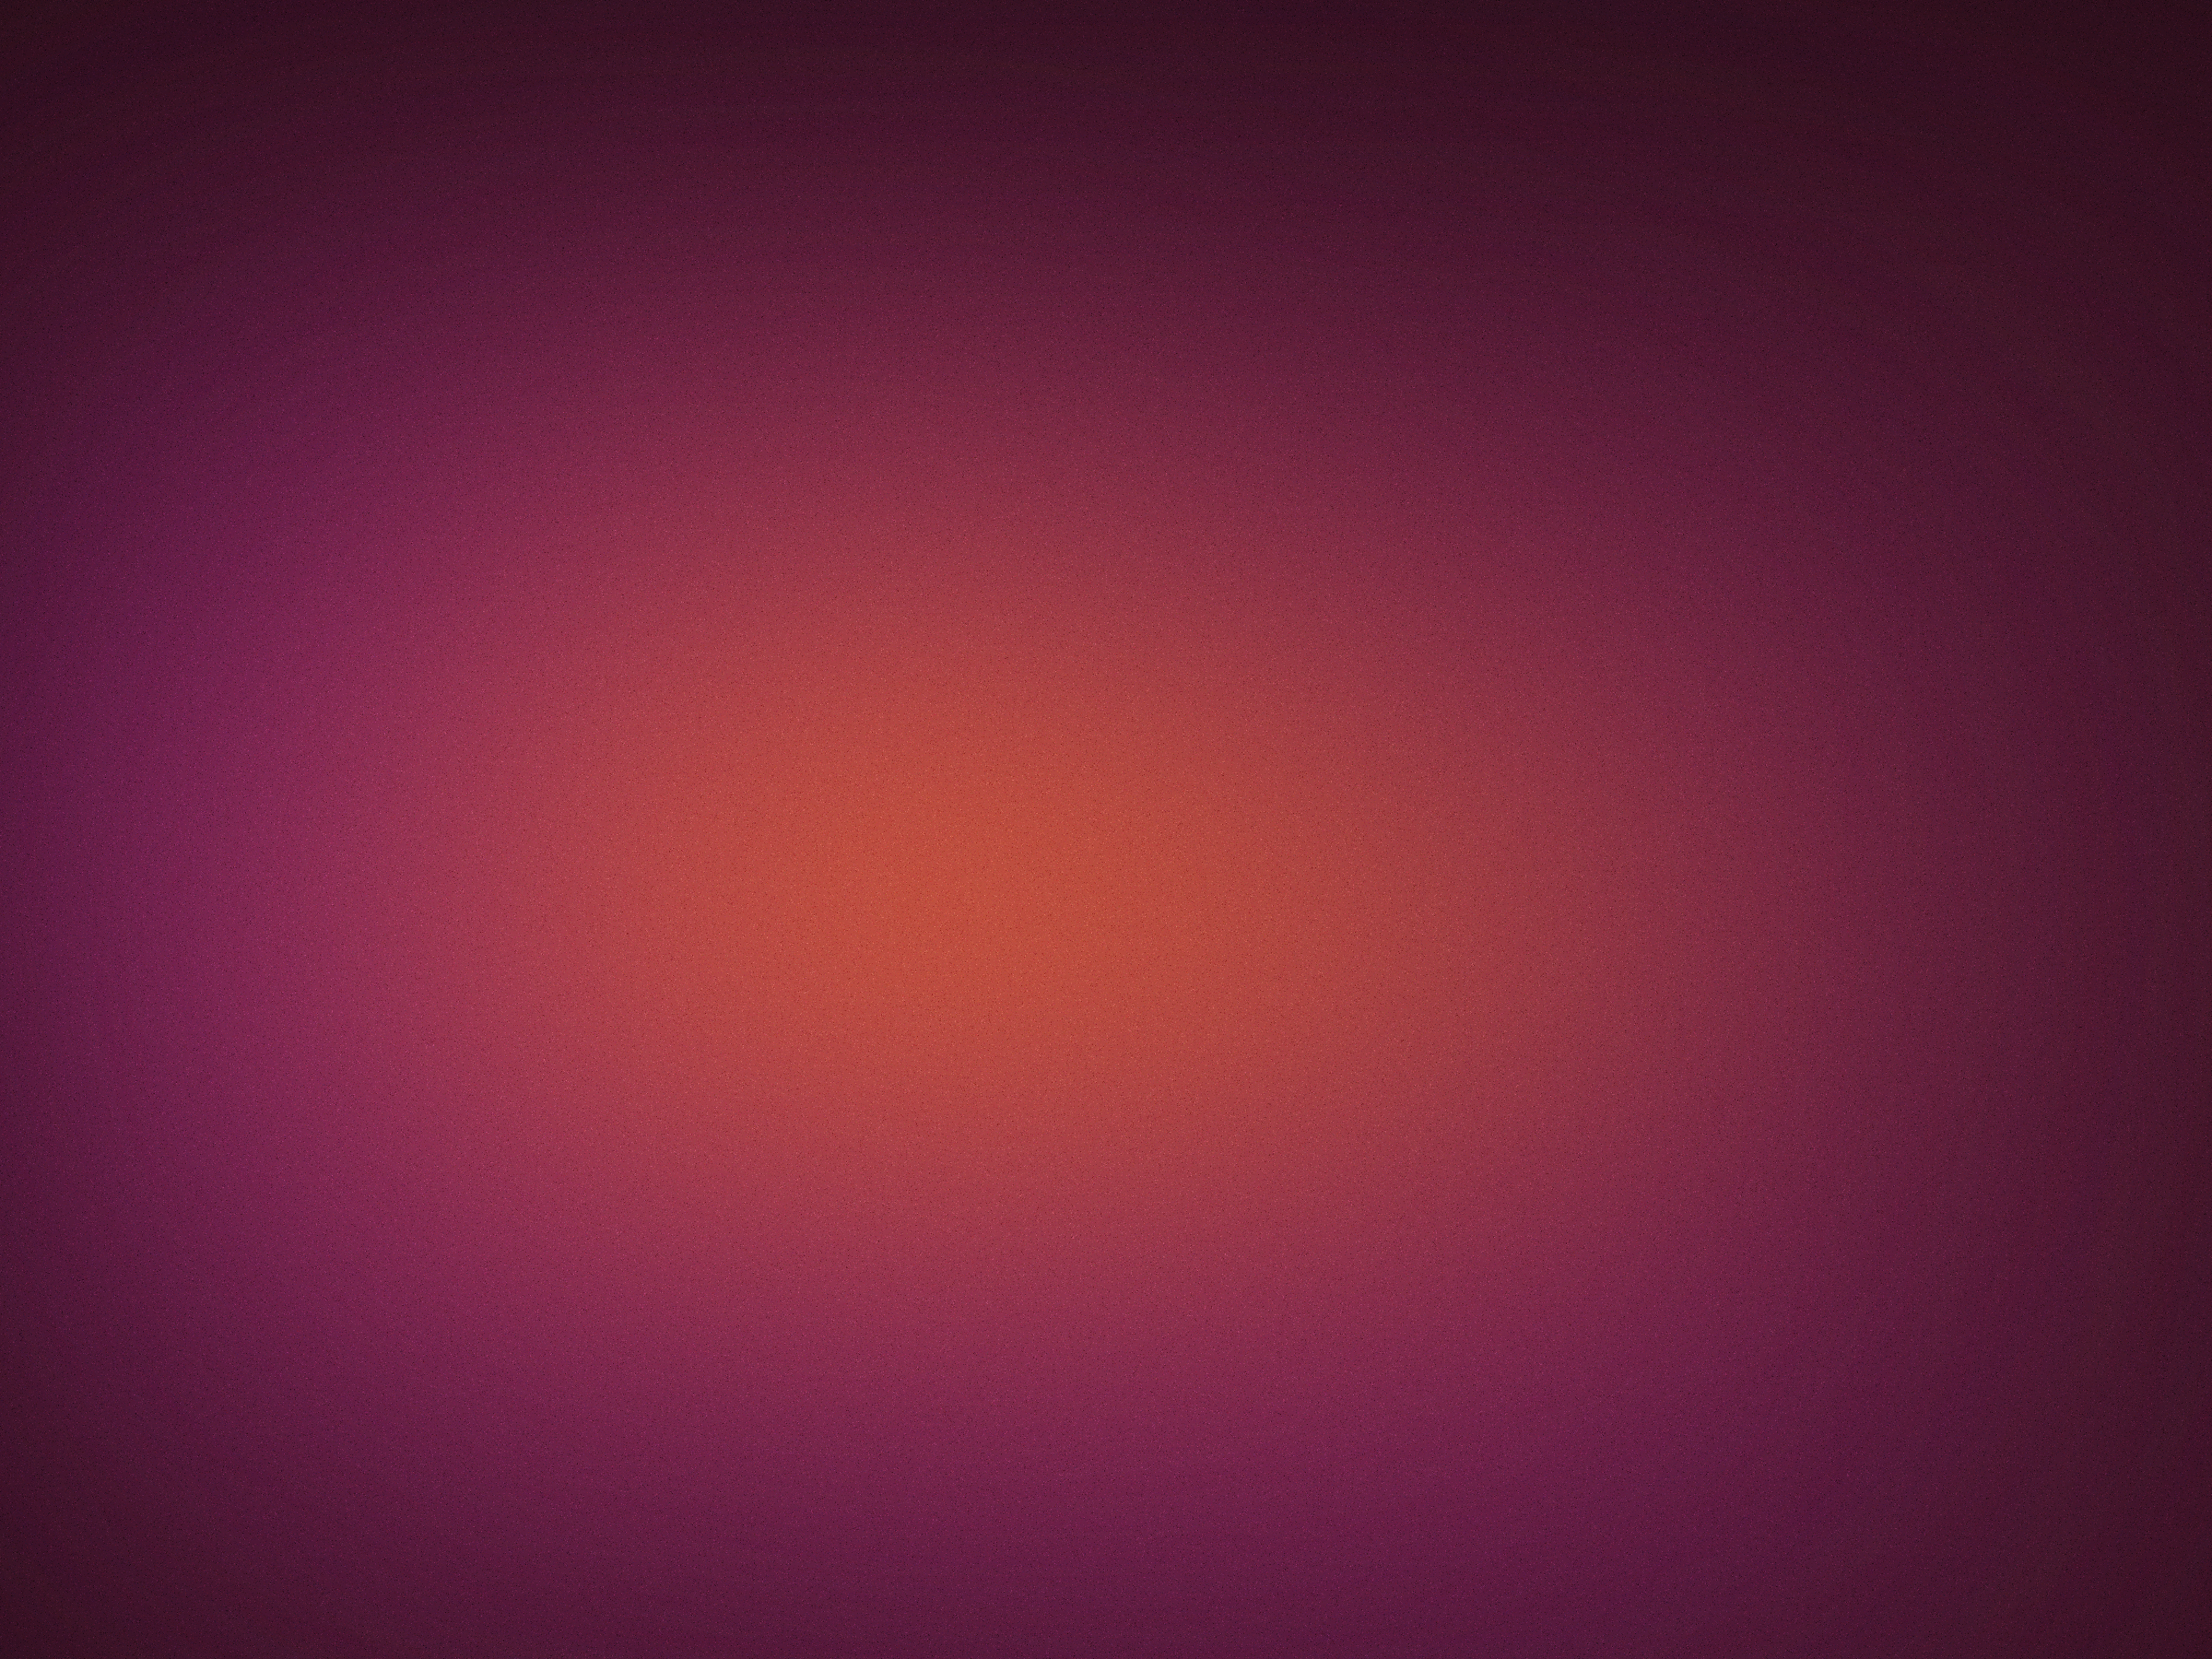 Official Ubuntu Wallpaper Ubuntu concept wallpaper by 2400x1800